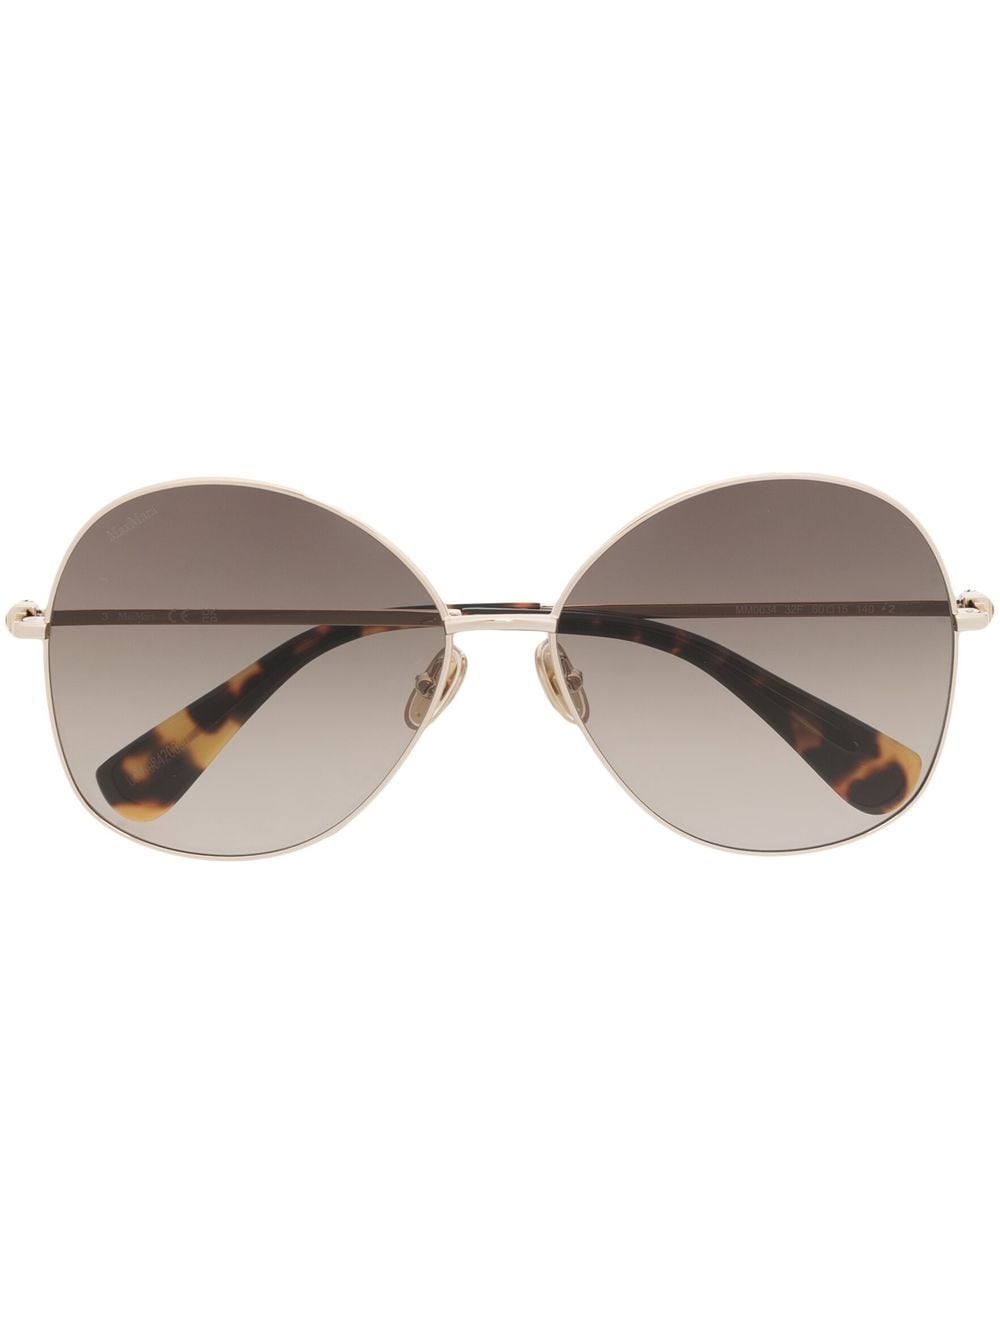 Image 1 of Max Mara round-frame gradient sunglasses